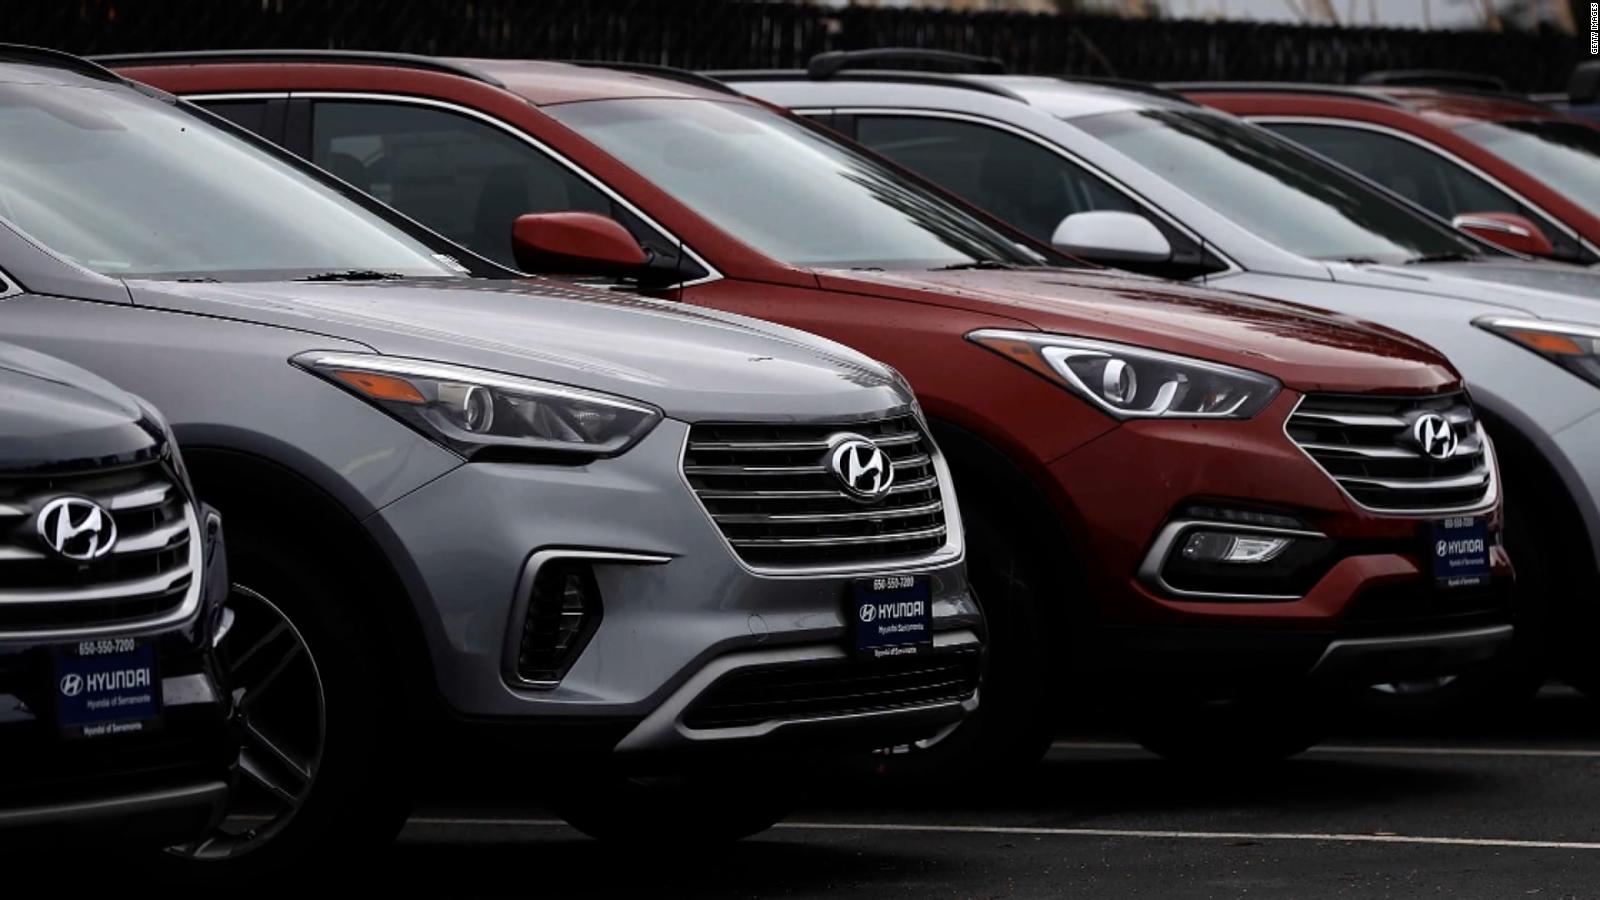 USA: Several Kia and Hyundai car models are recalled from the market